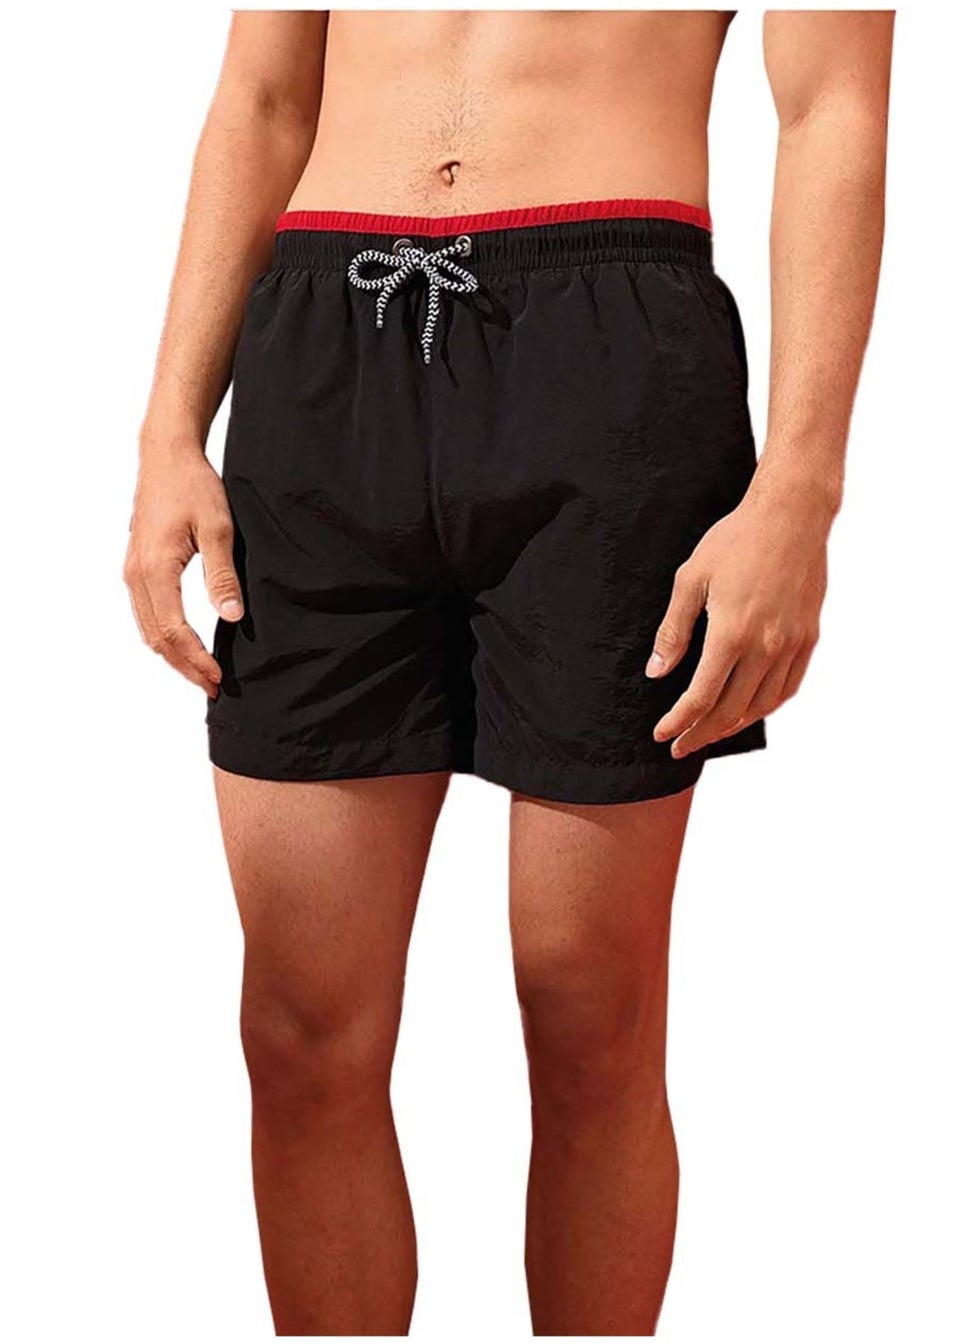 Asquith & Fox Black/Red Swim Shorts